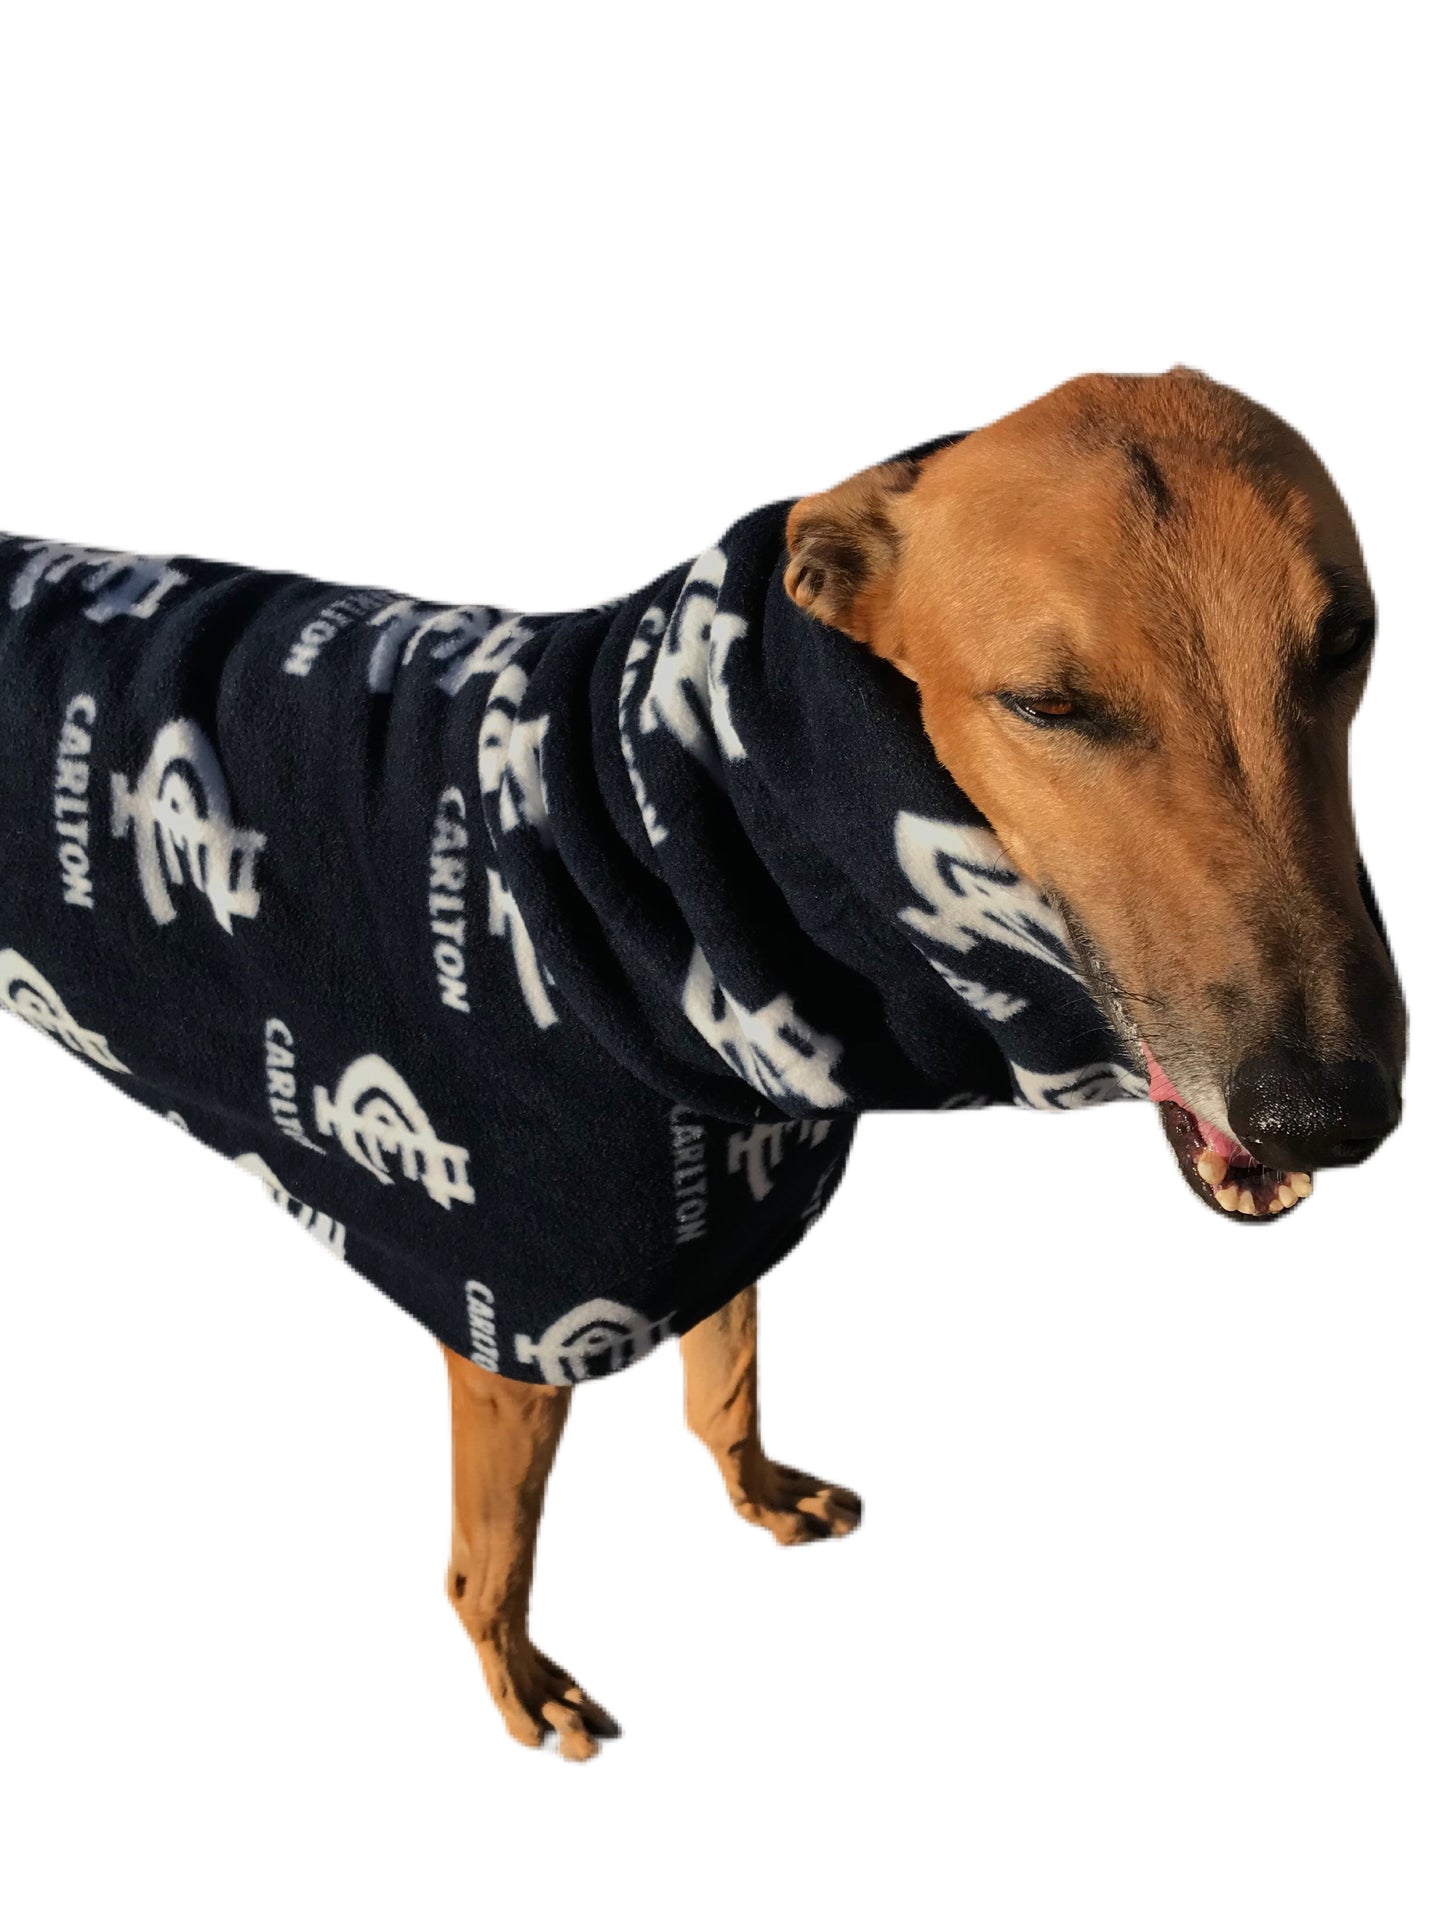 AFL Carlton inspired greyhound coat deluxe style double polar fleece washable